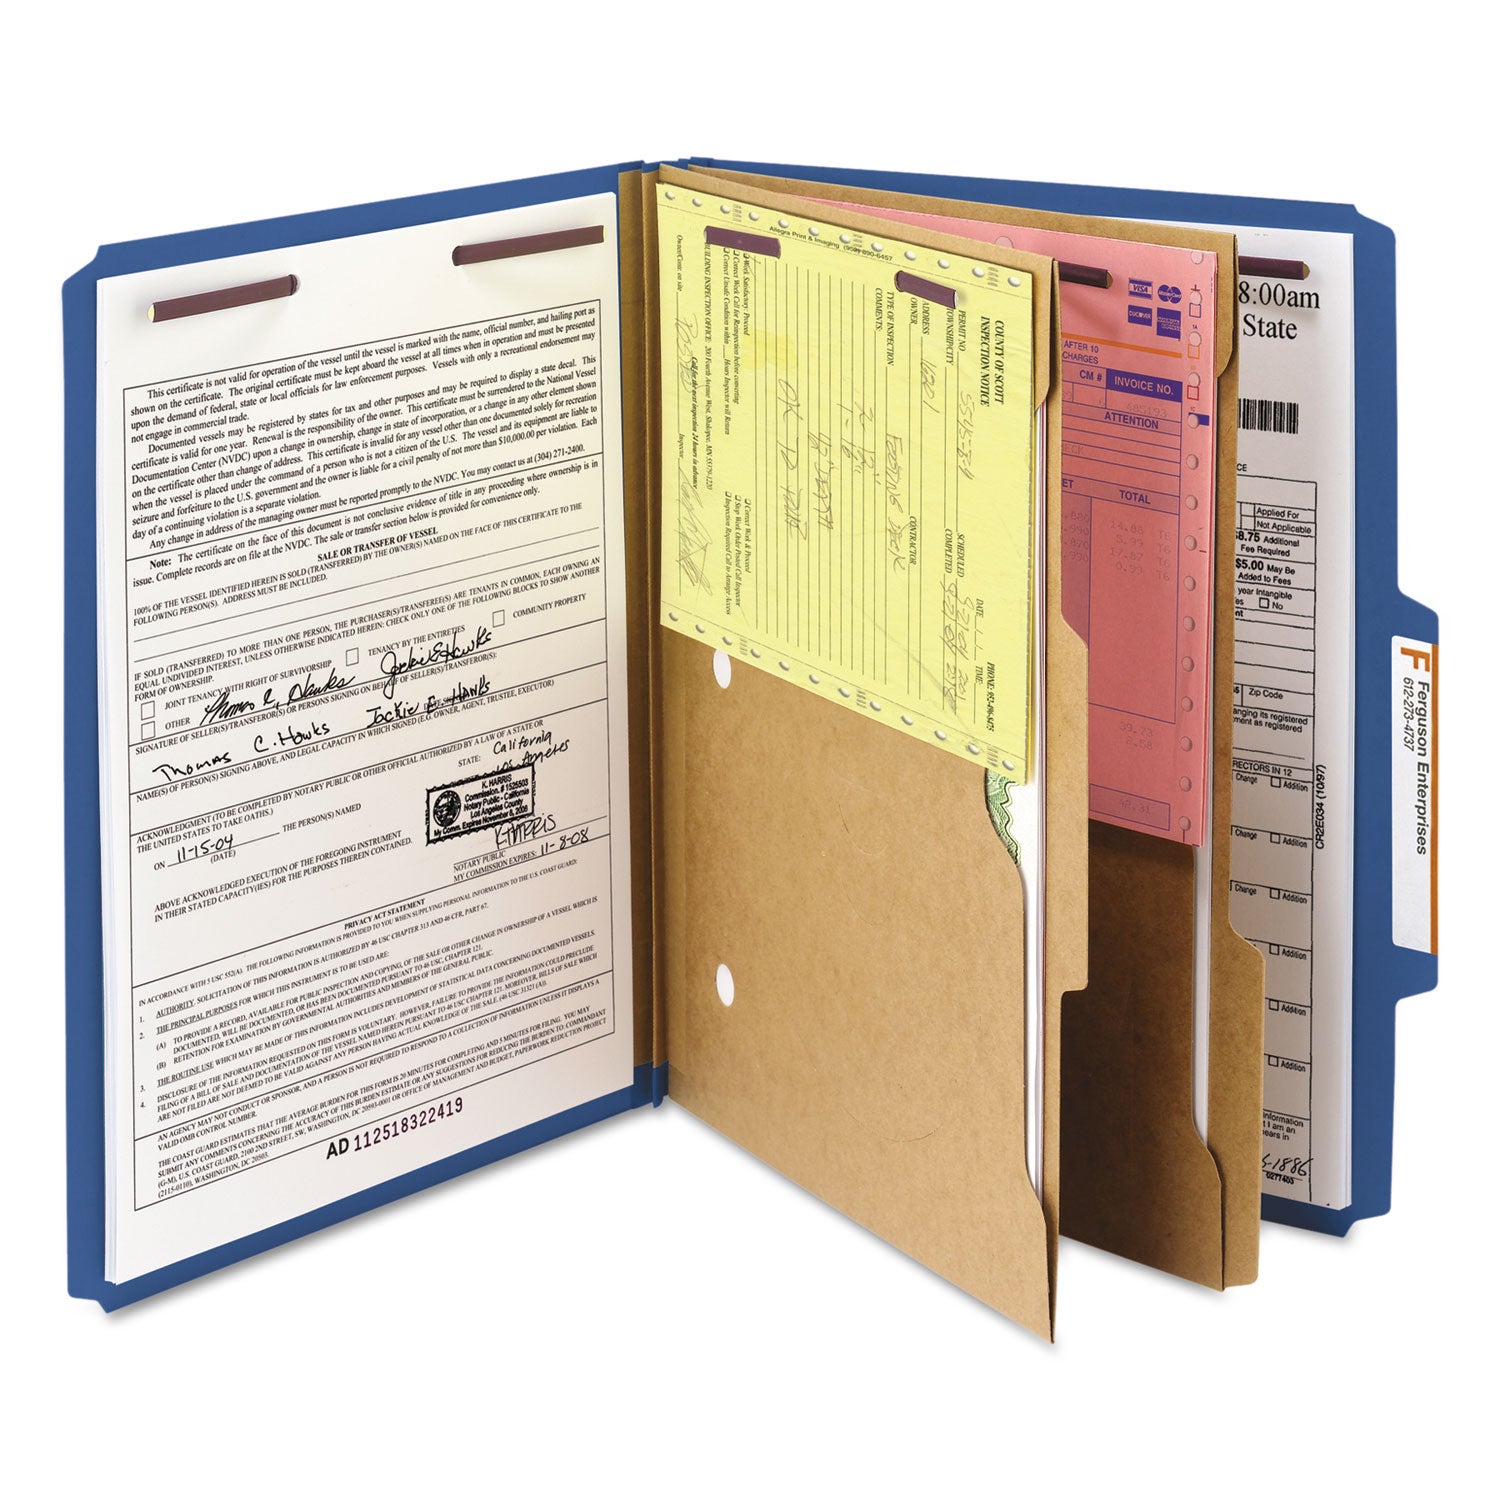 6-Section Pressboard Top Tab Pocket Classification Folders, 6 SafeSHIELD Fasteners, 2 Dividers, Letter Size, Dark Blue, 10/BX - 